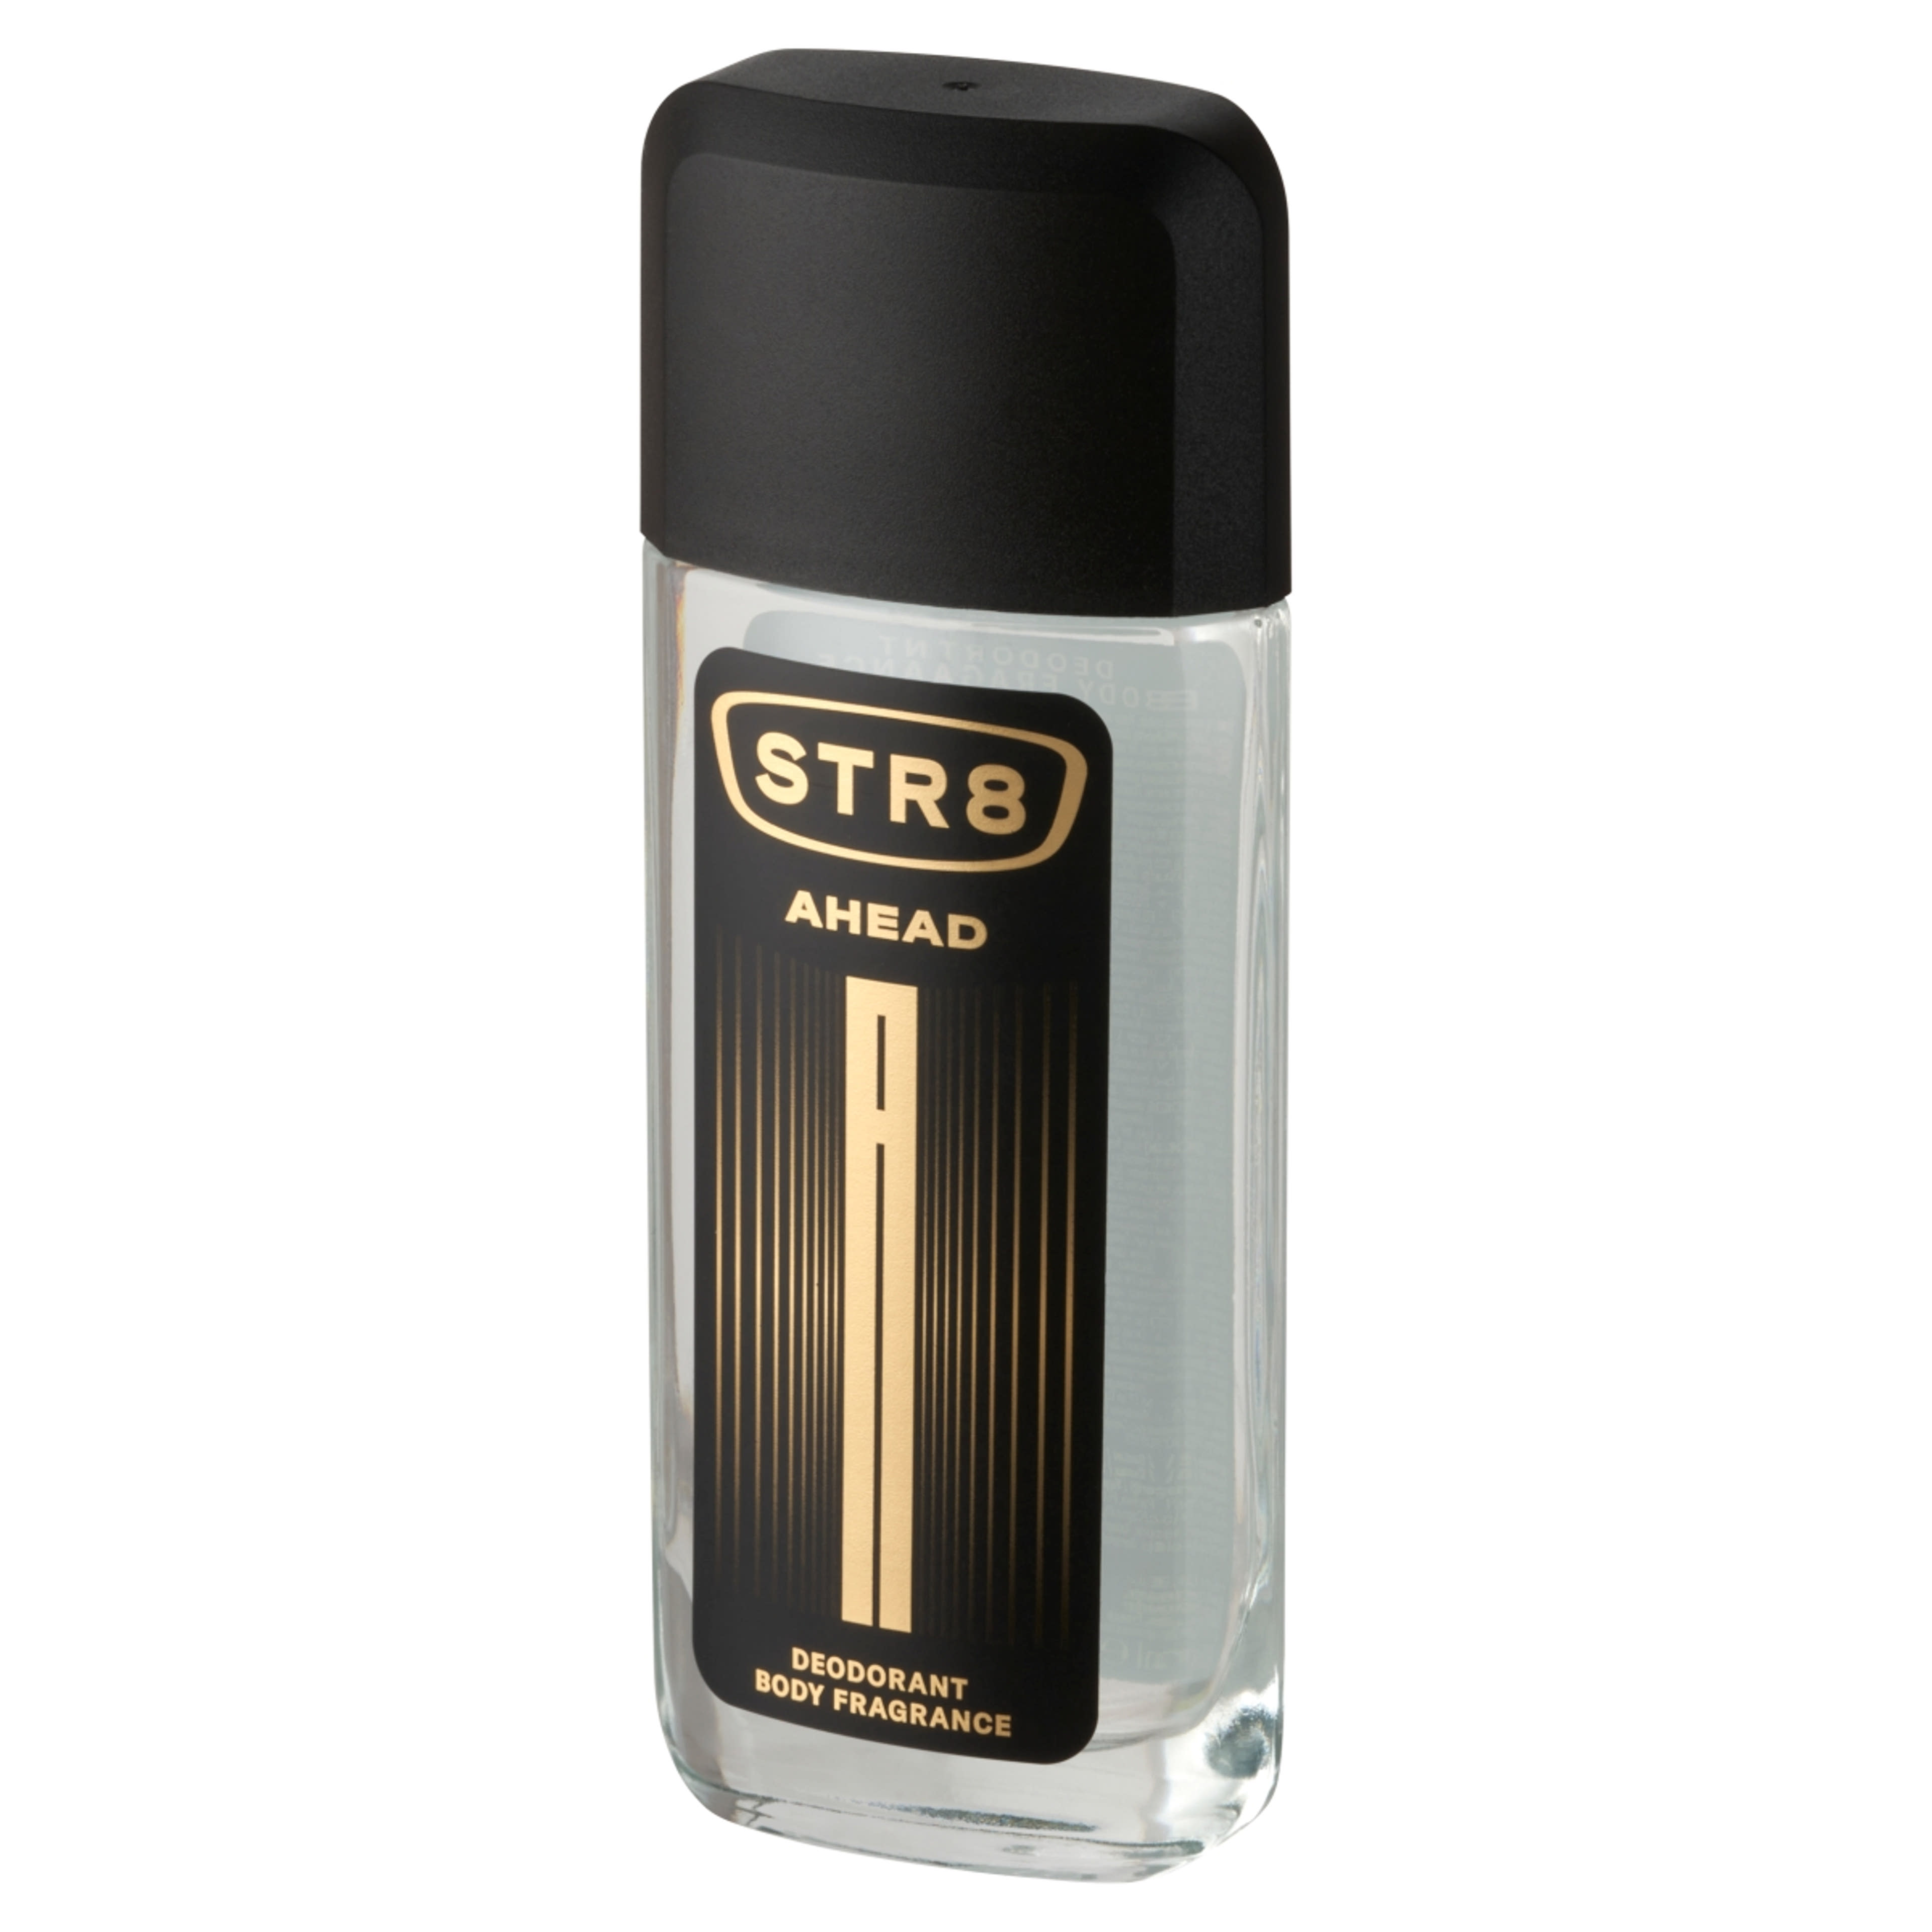 STR8 Ahead parfüm-spray - 85 ml-2